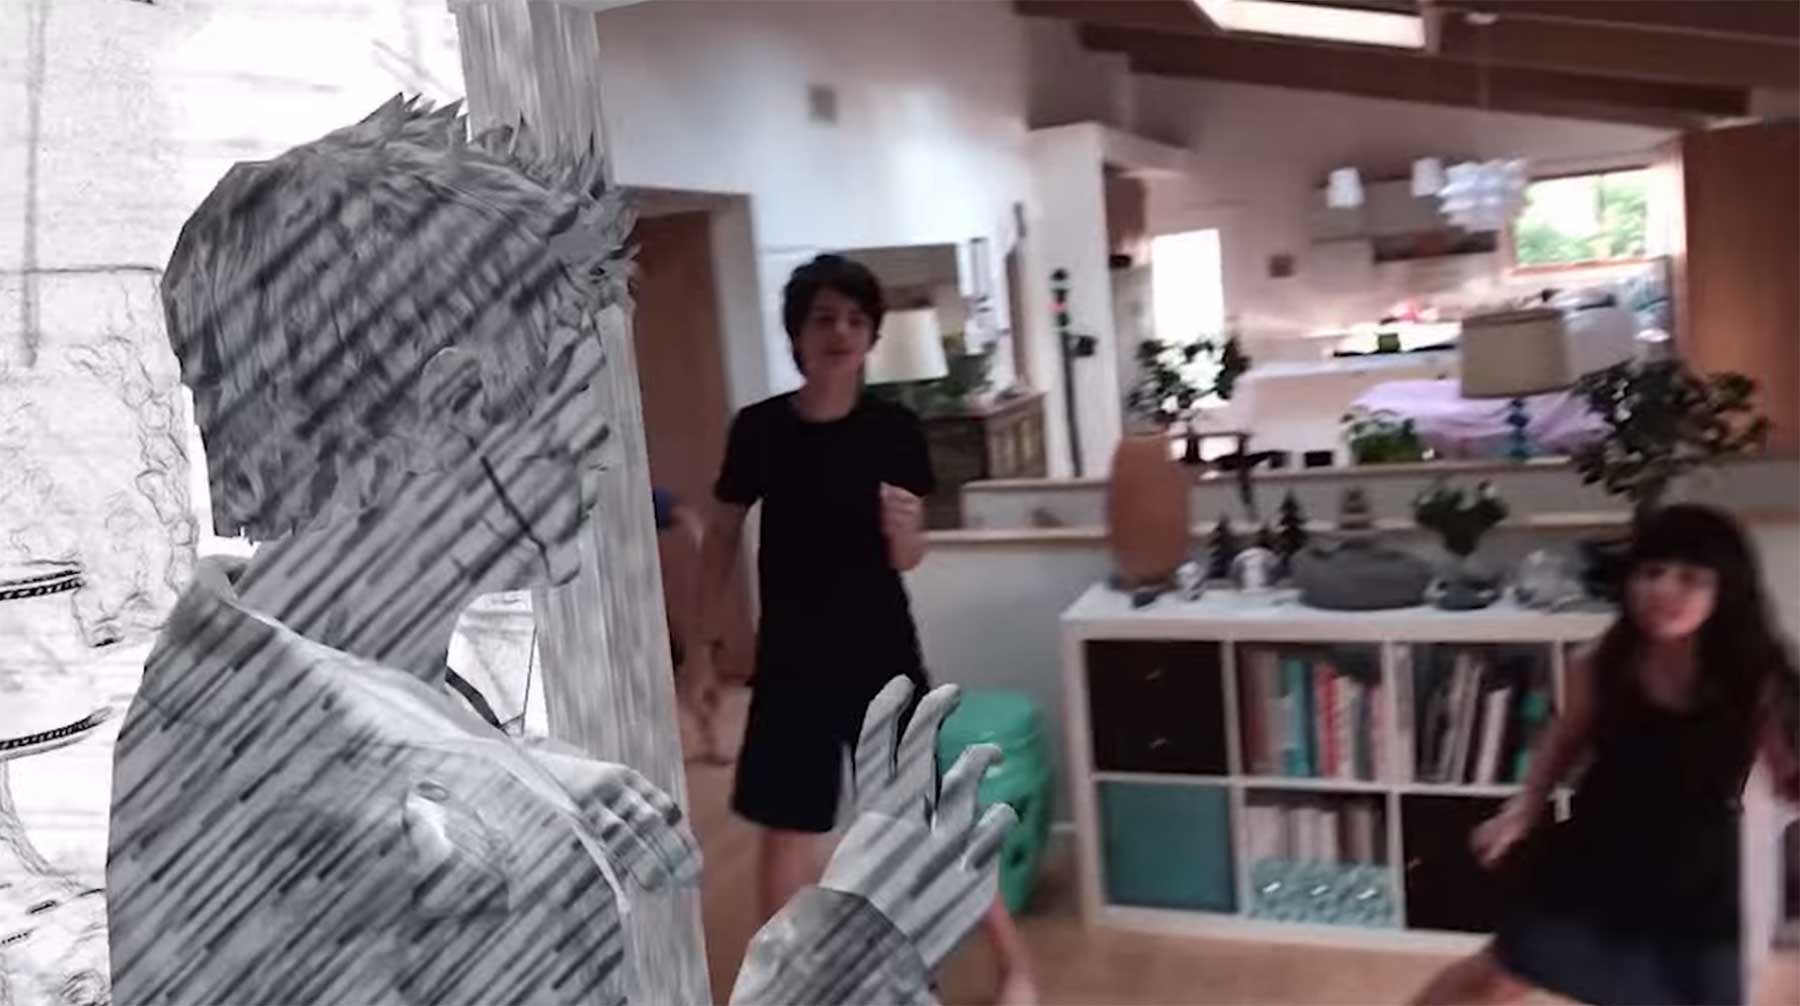 Dank Augmented Reality mitten im "Take On Me"-Musikvideo take-on-me-augmented-reality 